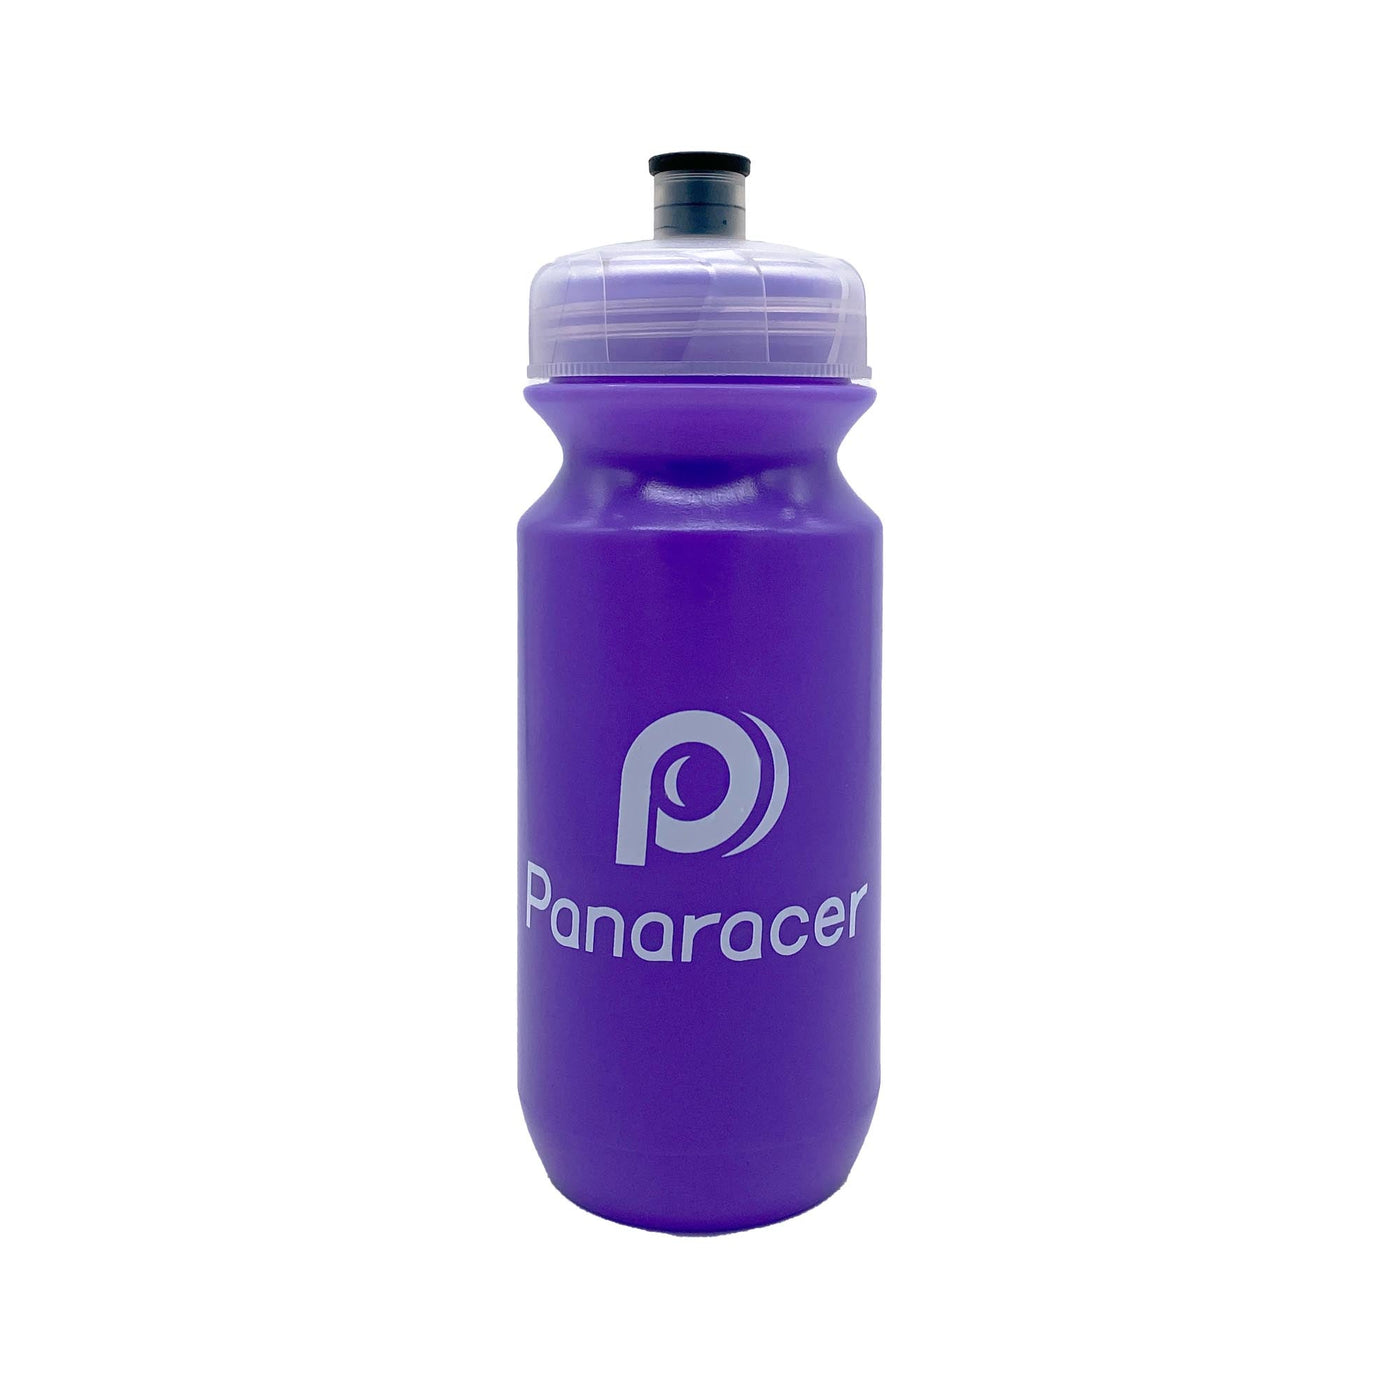 Panaracer Water Bottle, 21 oz